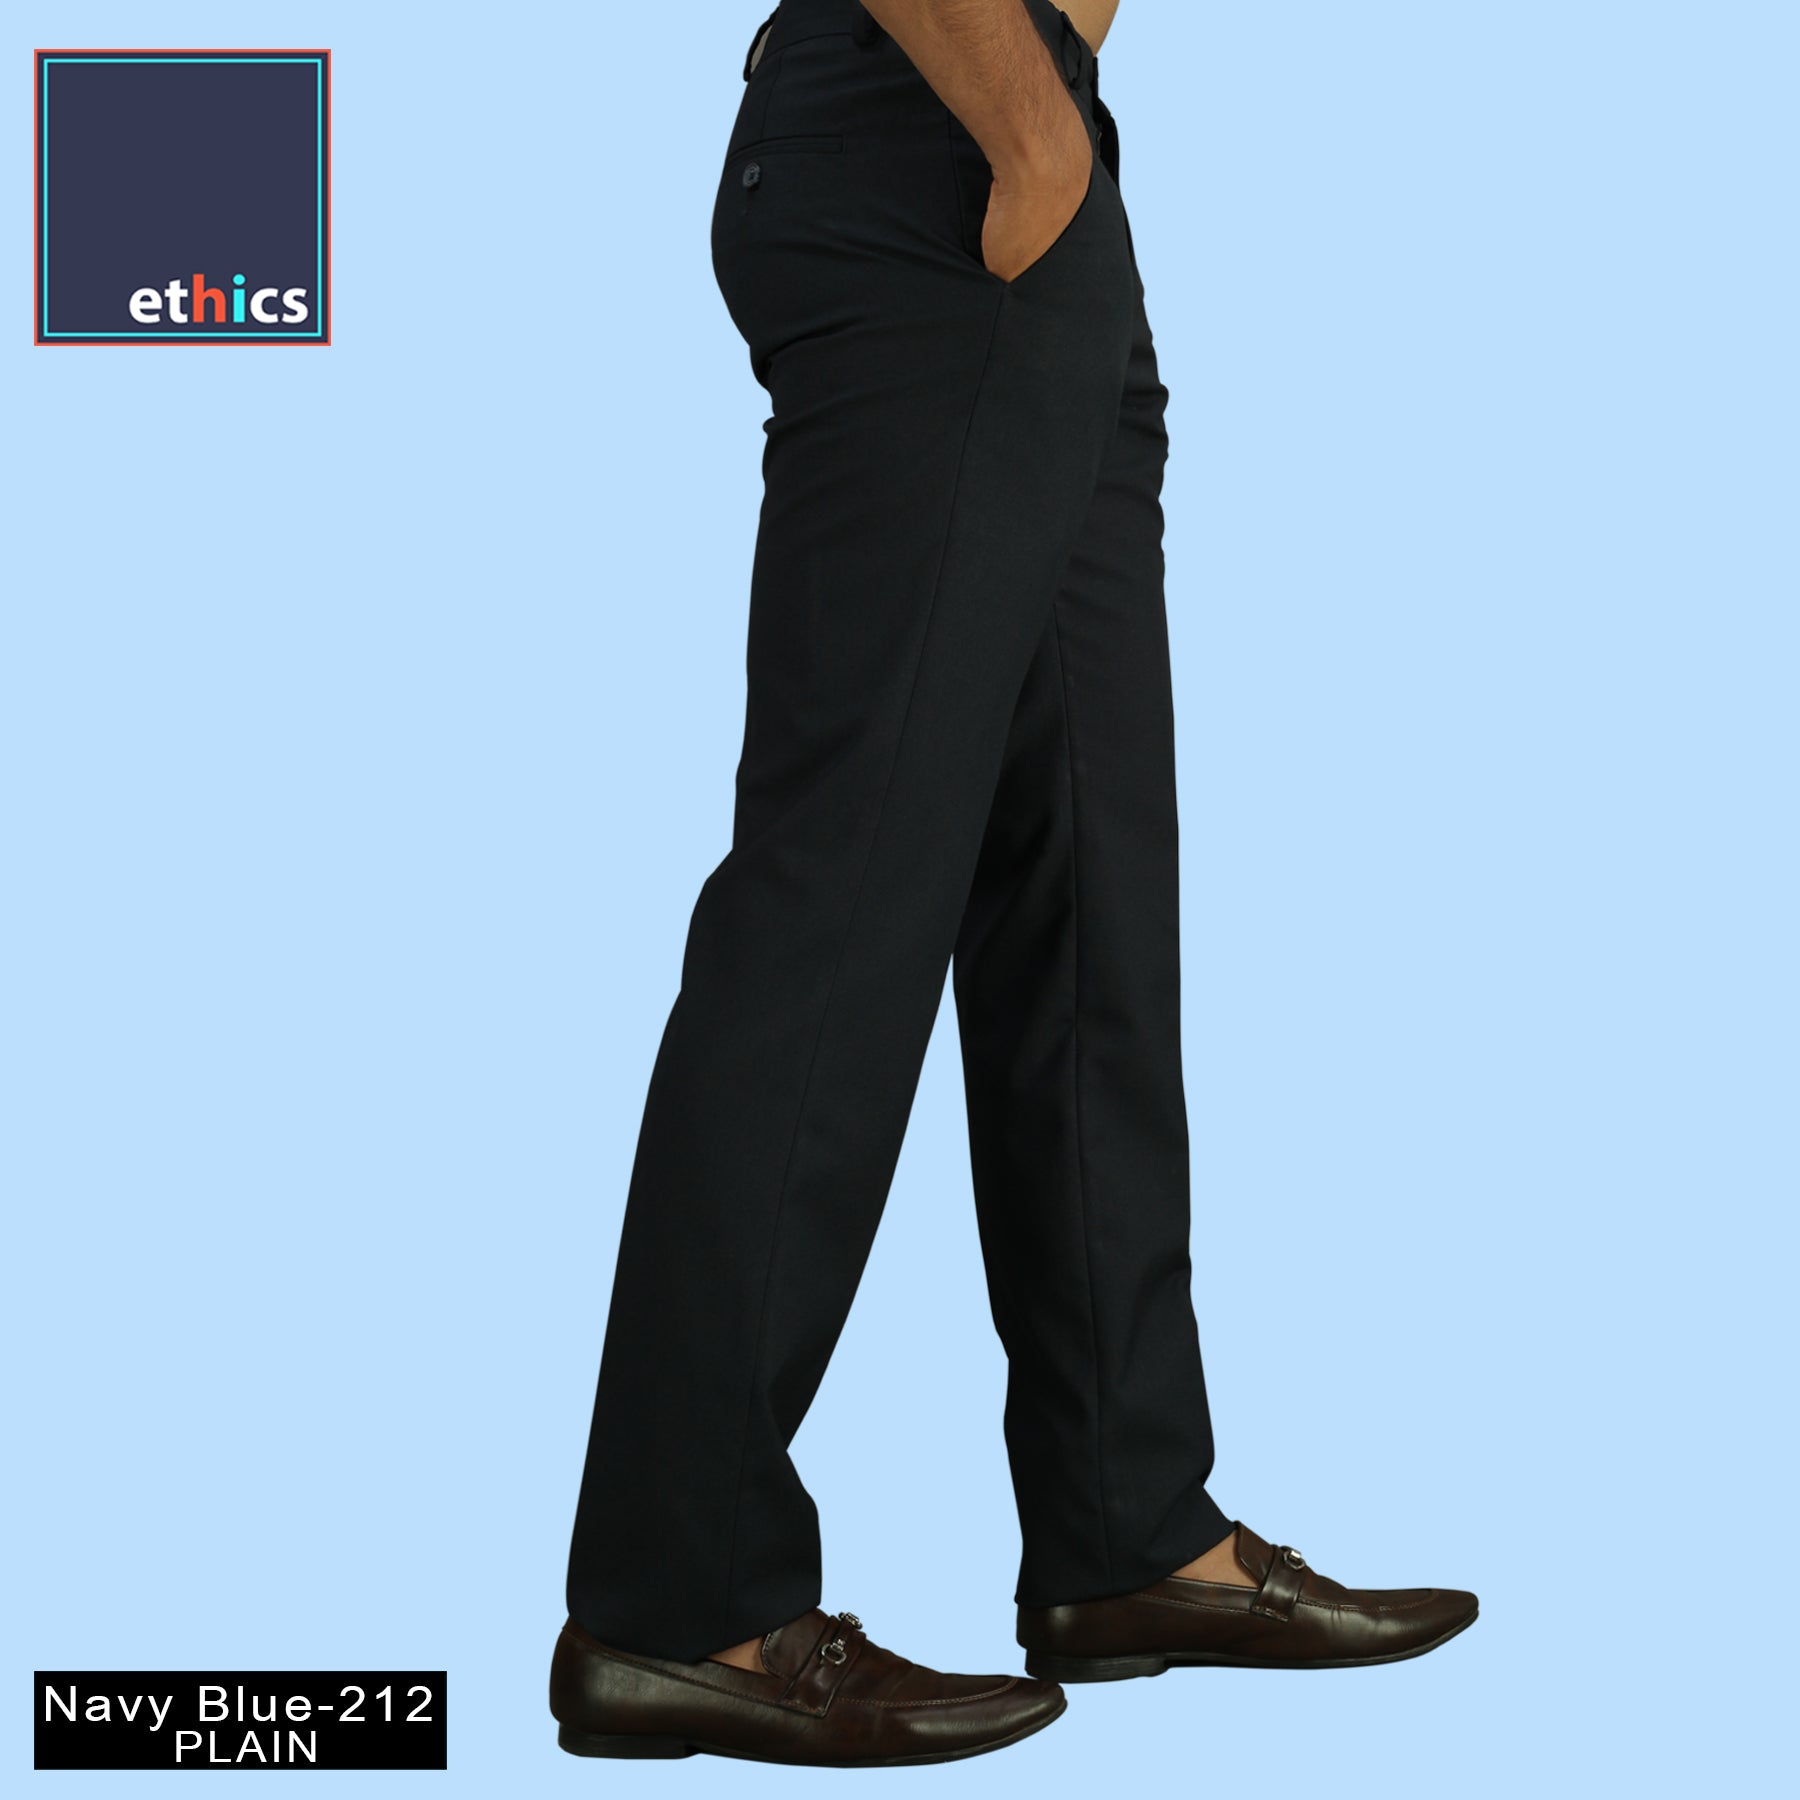 Buy Arrow Men Dark Blue Tartan Check Formal Trousers  NNNOWcom